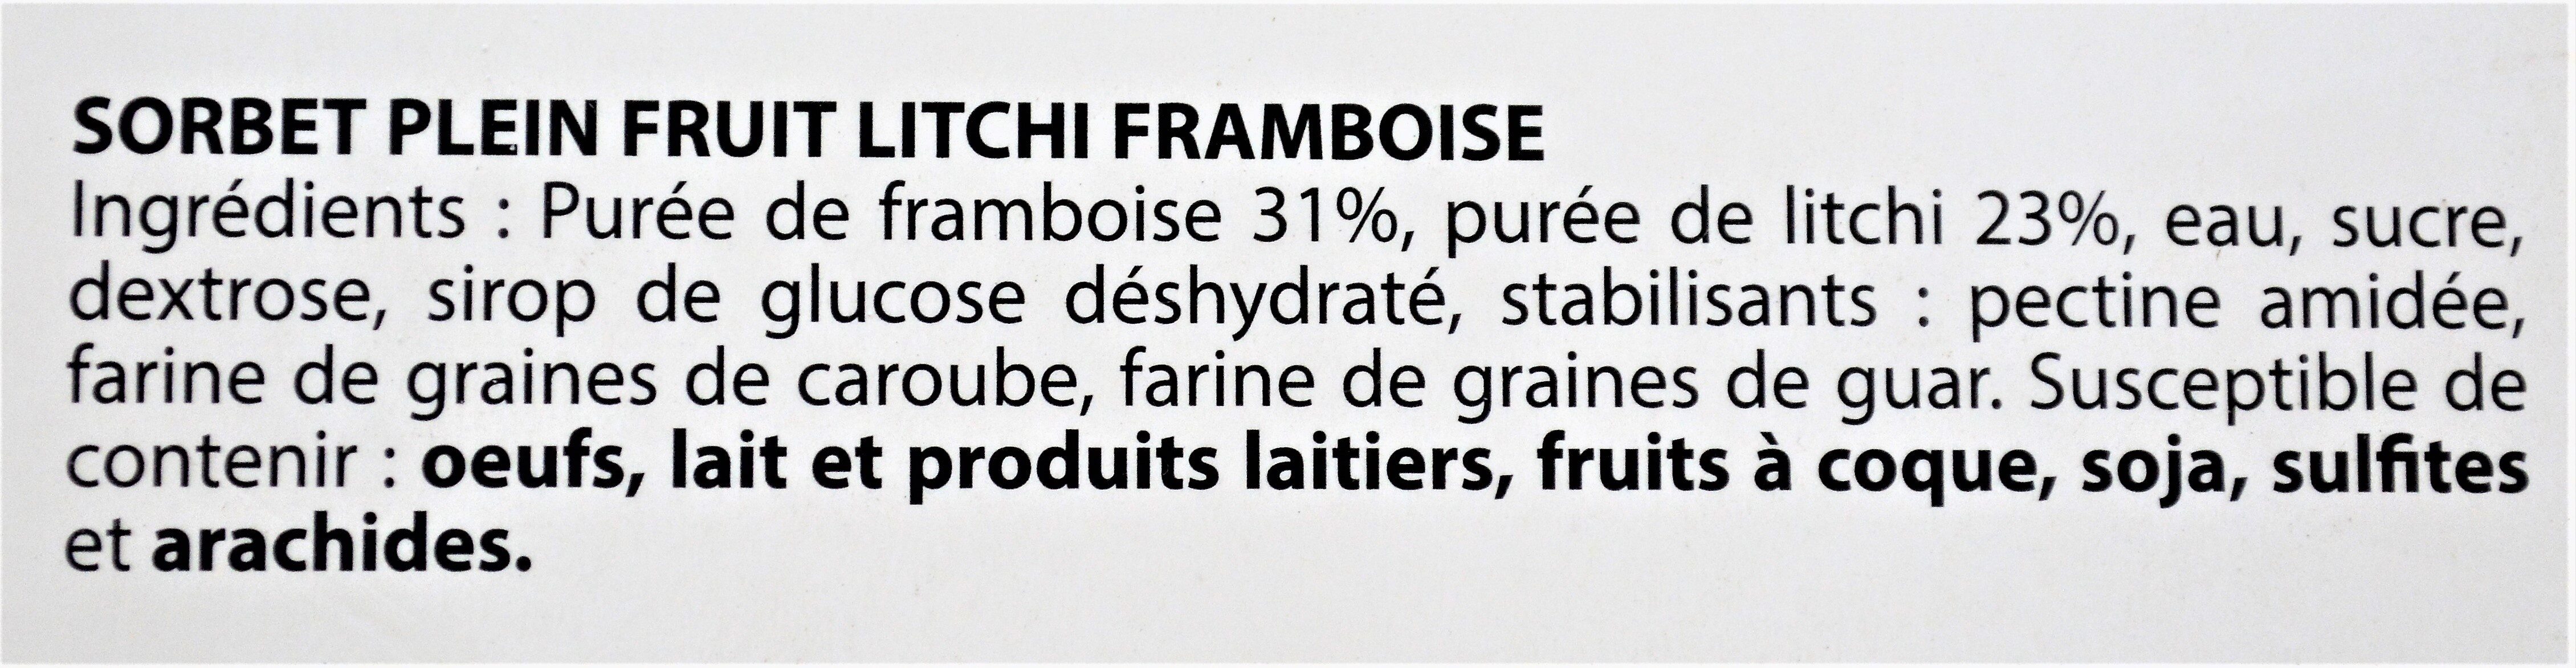 Sorbet plein fruit litchi framboise - Ingredients - fr